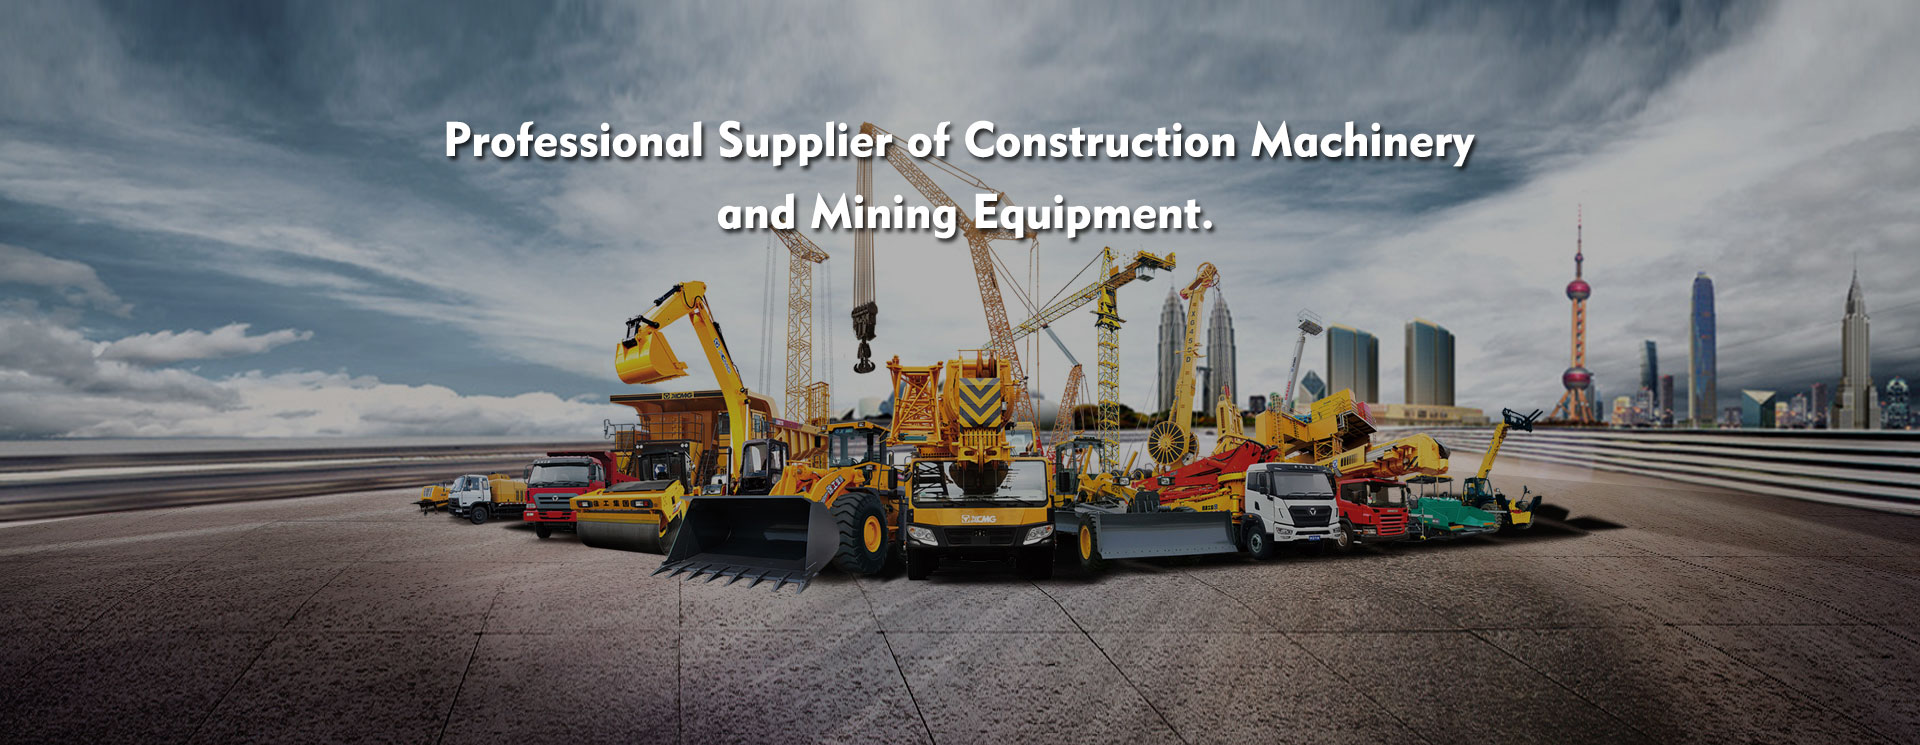 Construction Equipment | Mining Equipment | Super-above Industry